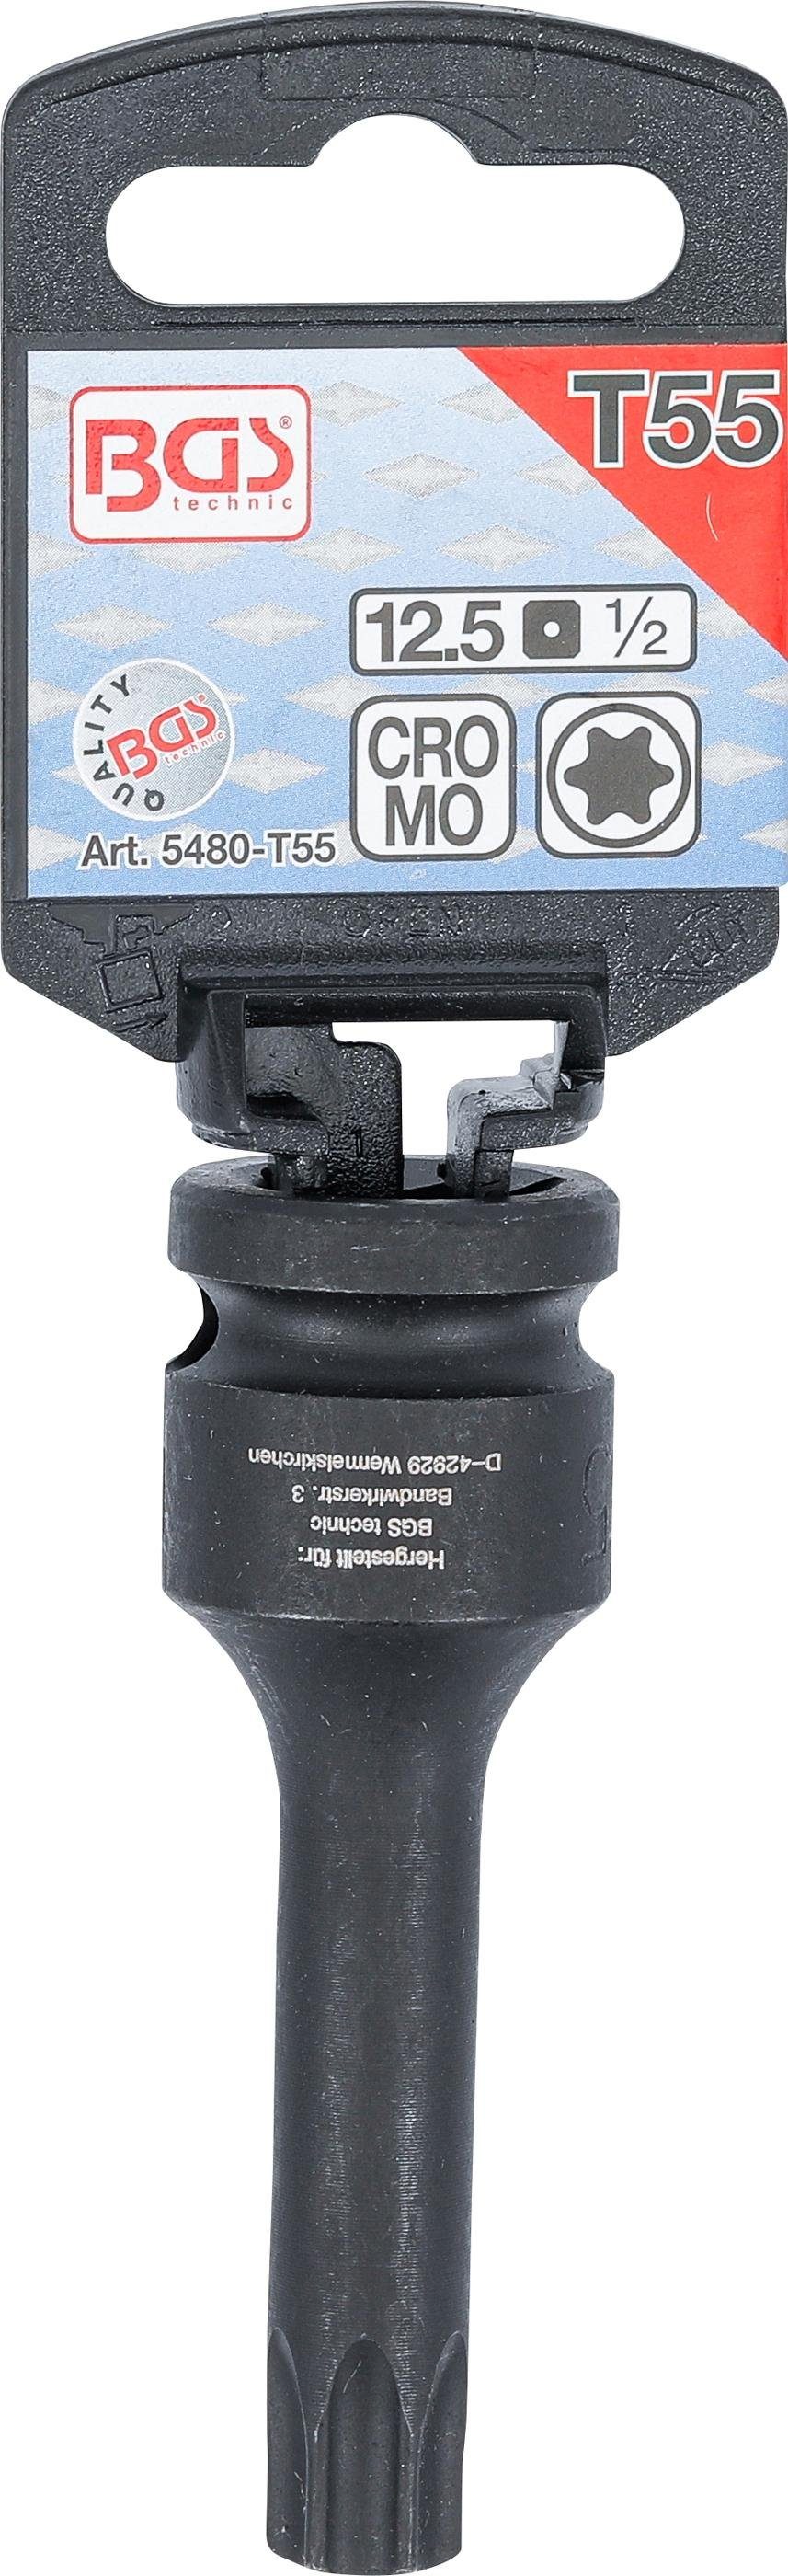 BGS technic Antrieb Torx) (1/2), Innenvierkant Kraft-Bit-Einsatz, T55 Bit-Schraubendreher 12,5 T-Profil mm (für